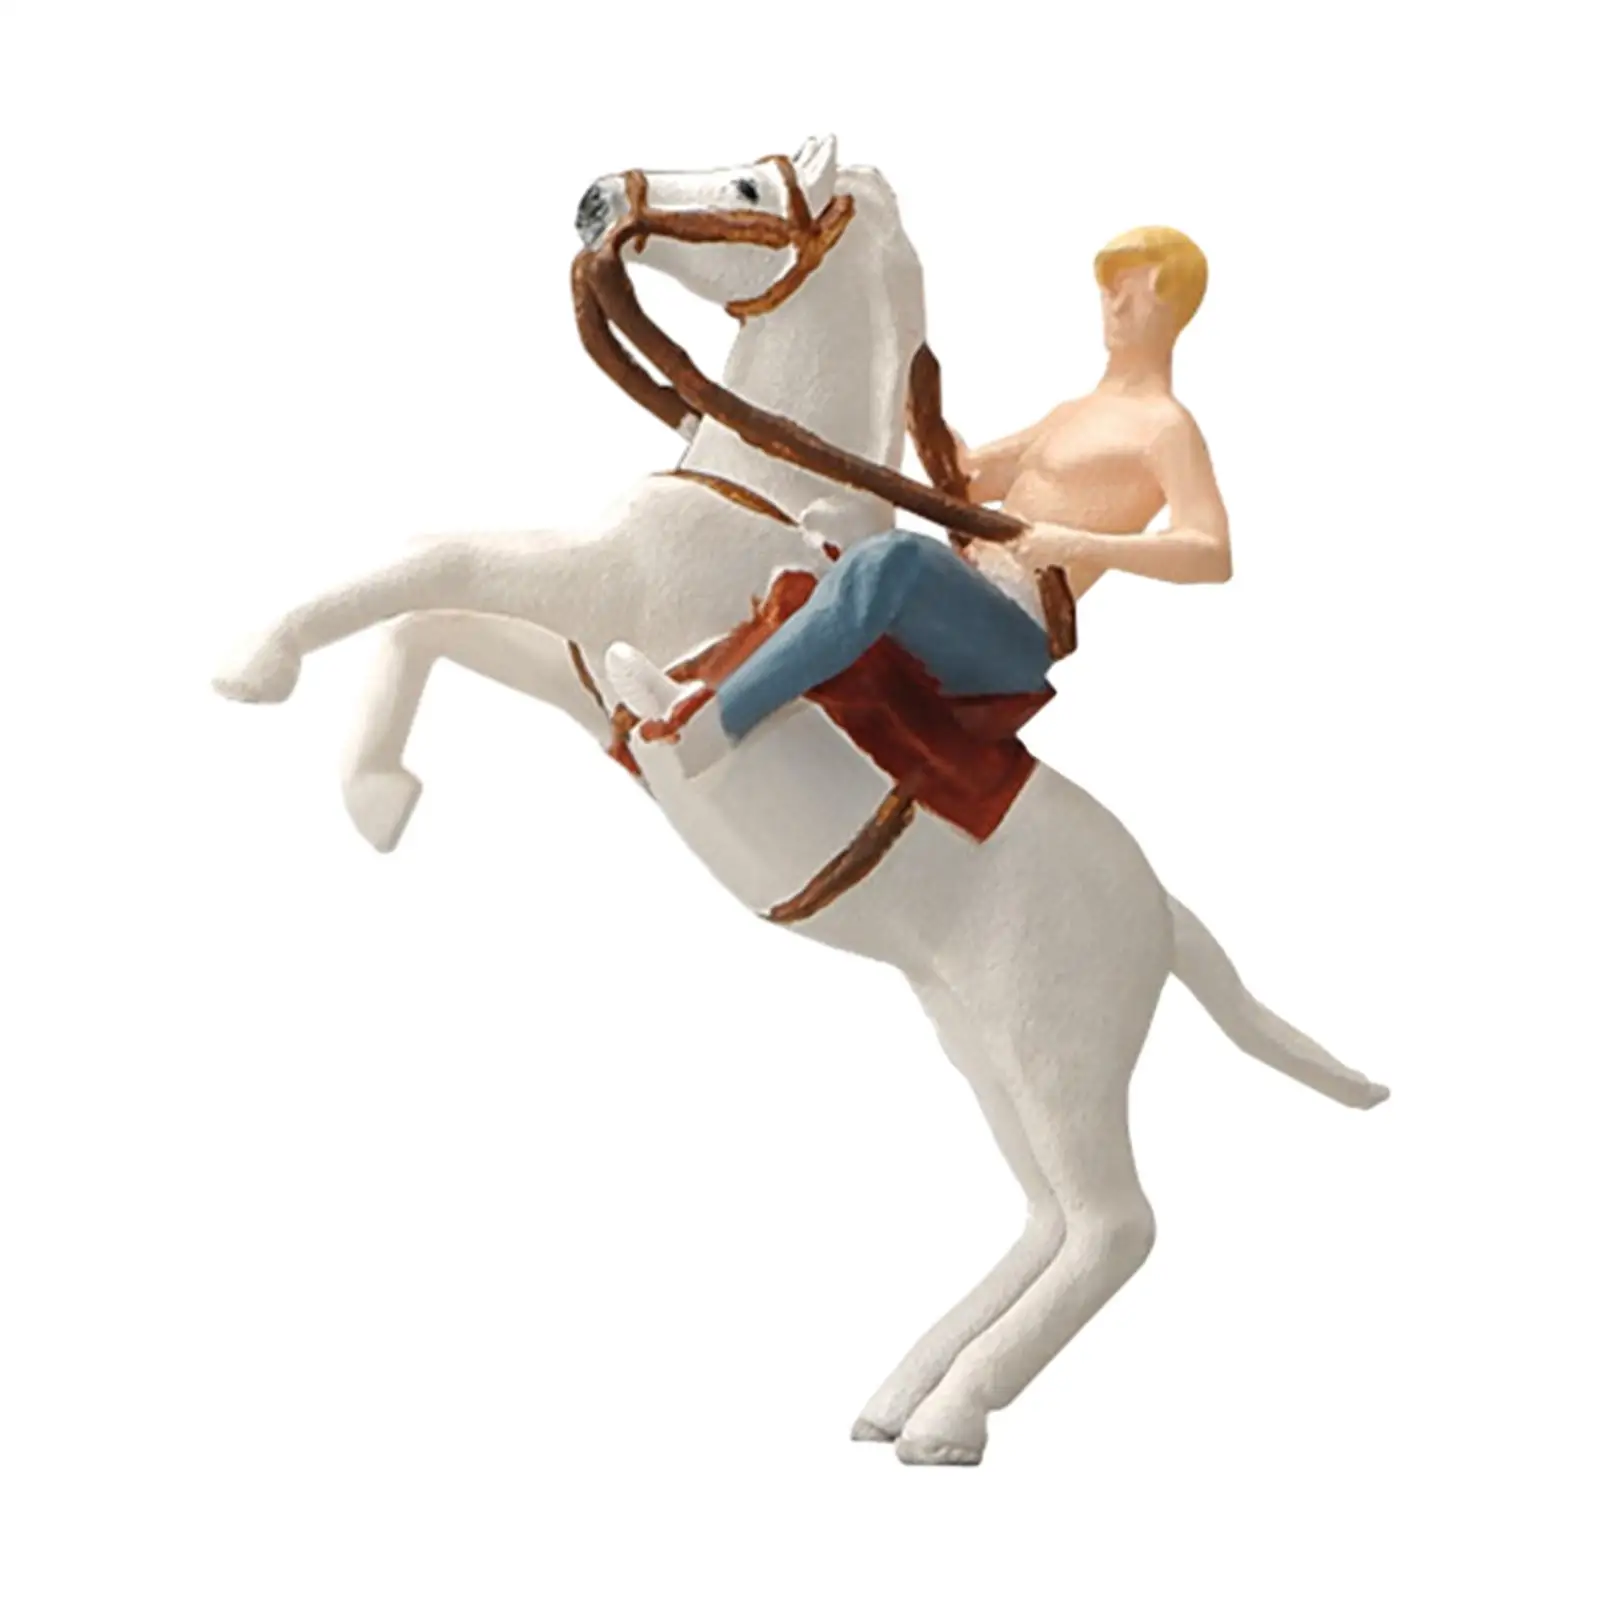 1:64 Scale Male on Horseback Diorama Scenery Figures Mini Miniature Resin Figurine for Layout Decoration DIY Scene Decor